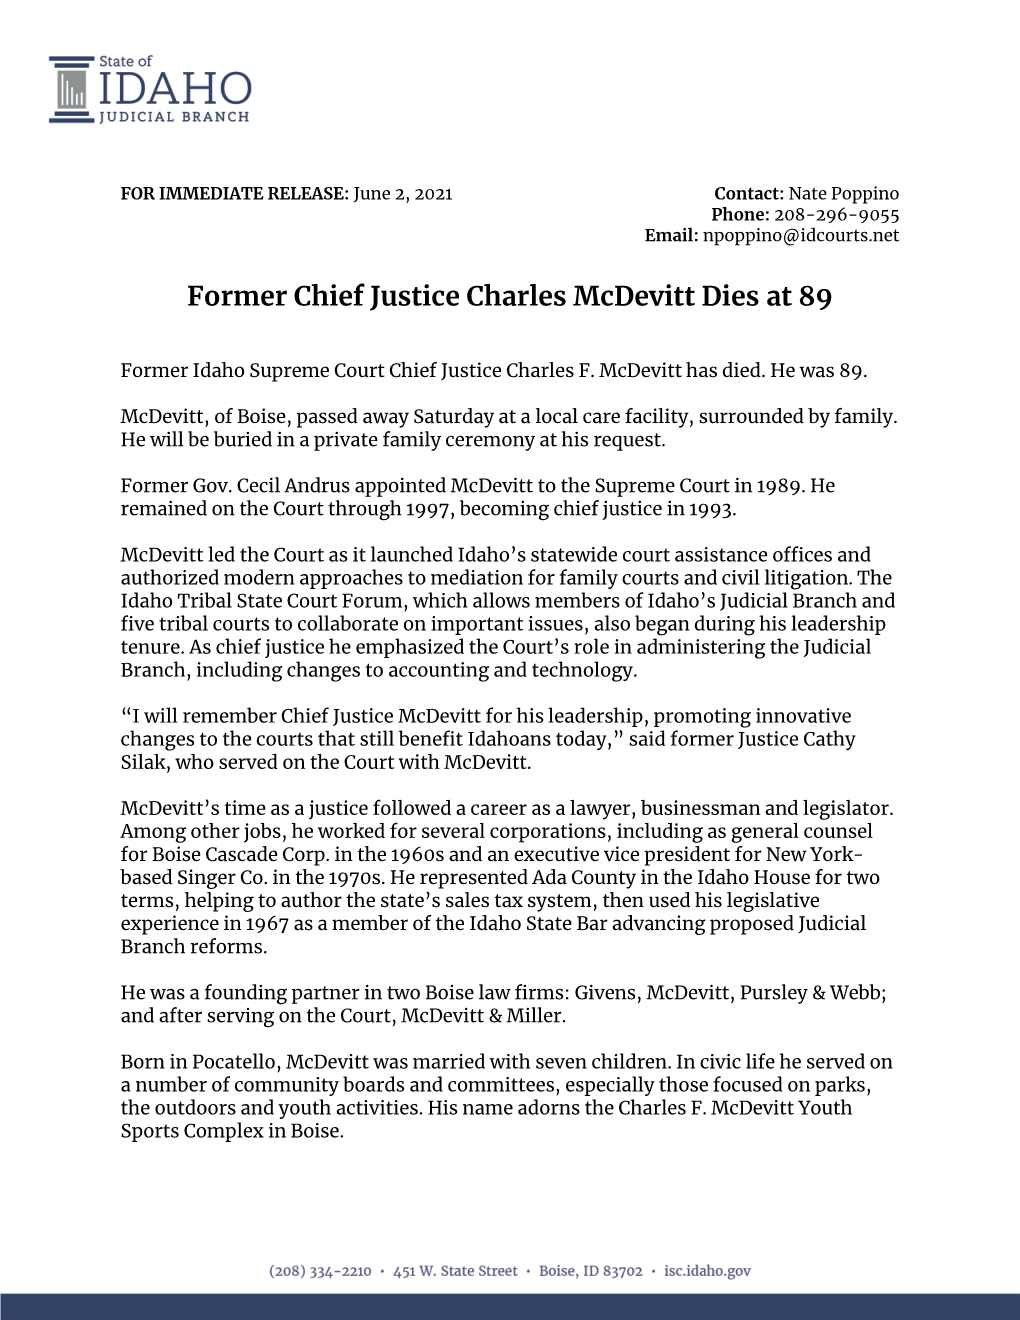 Former Chief Justice Charles Mcdevitt Dies at 89